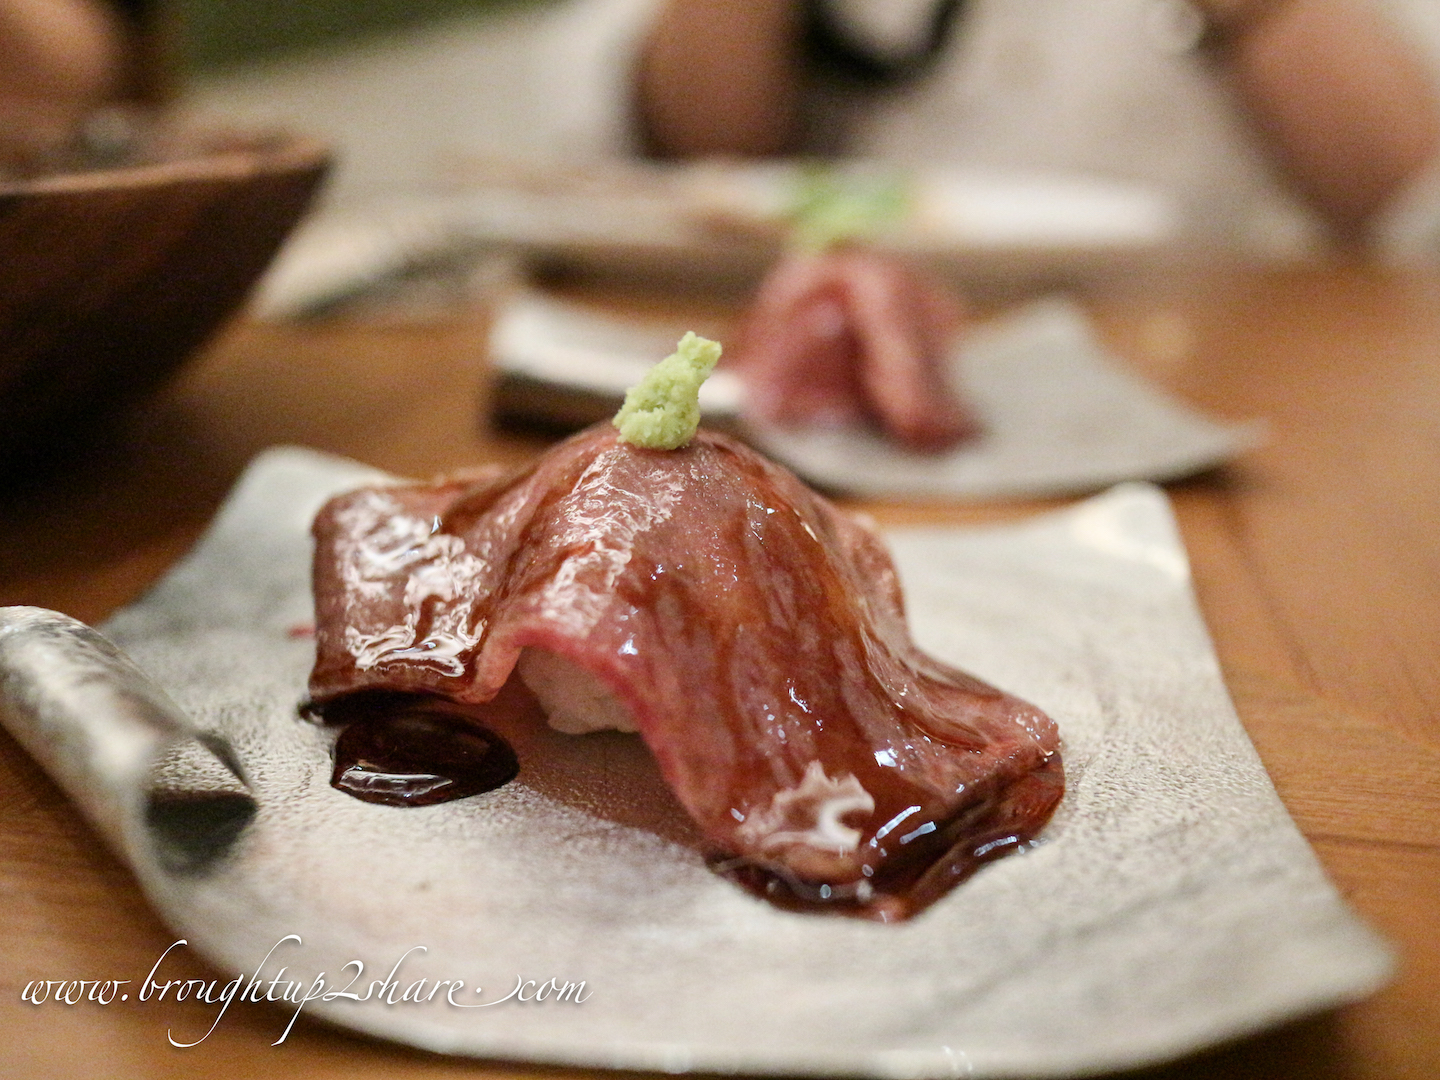 The Tokyo Restaurant, Isetan, Lot 10 - The Yum List